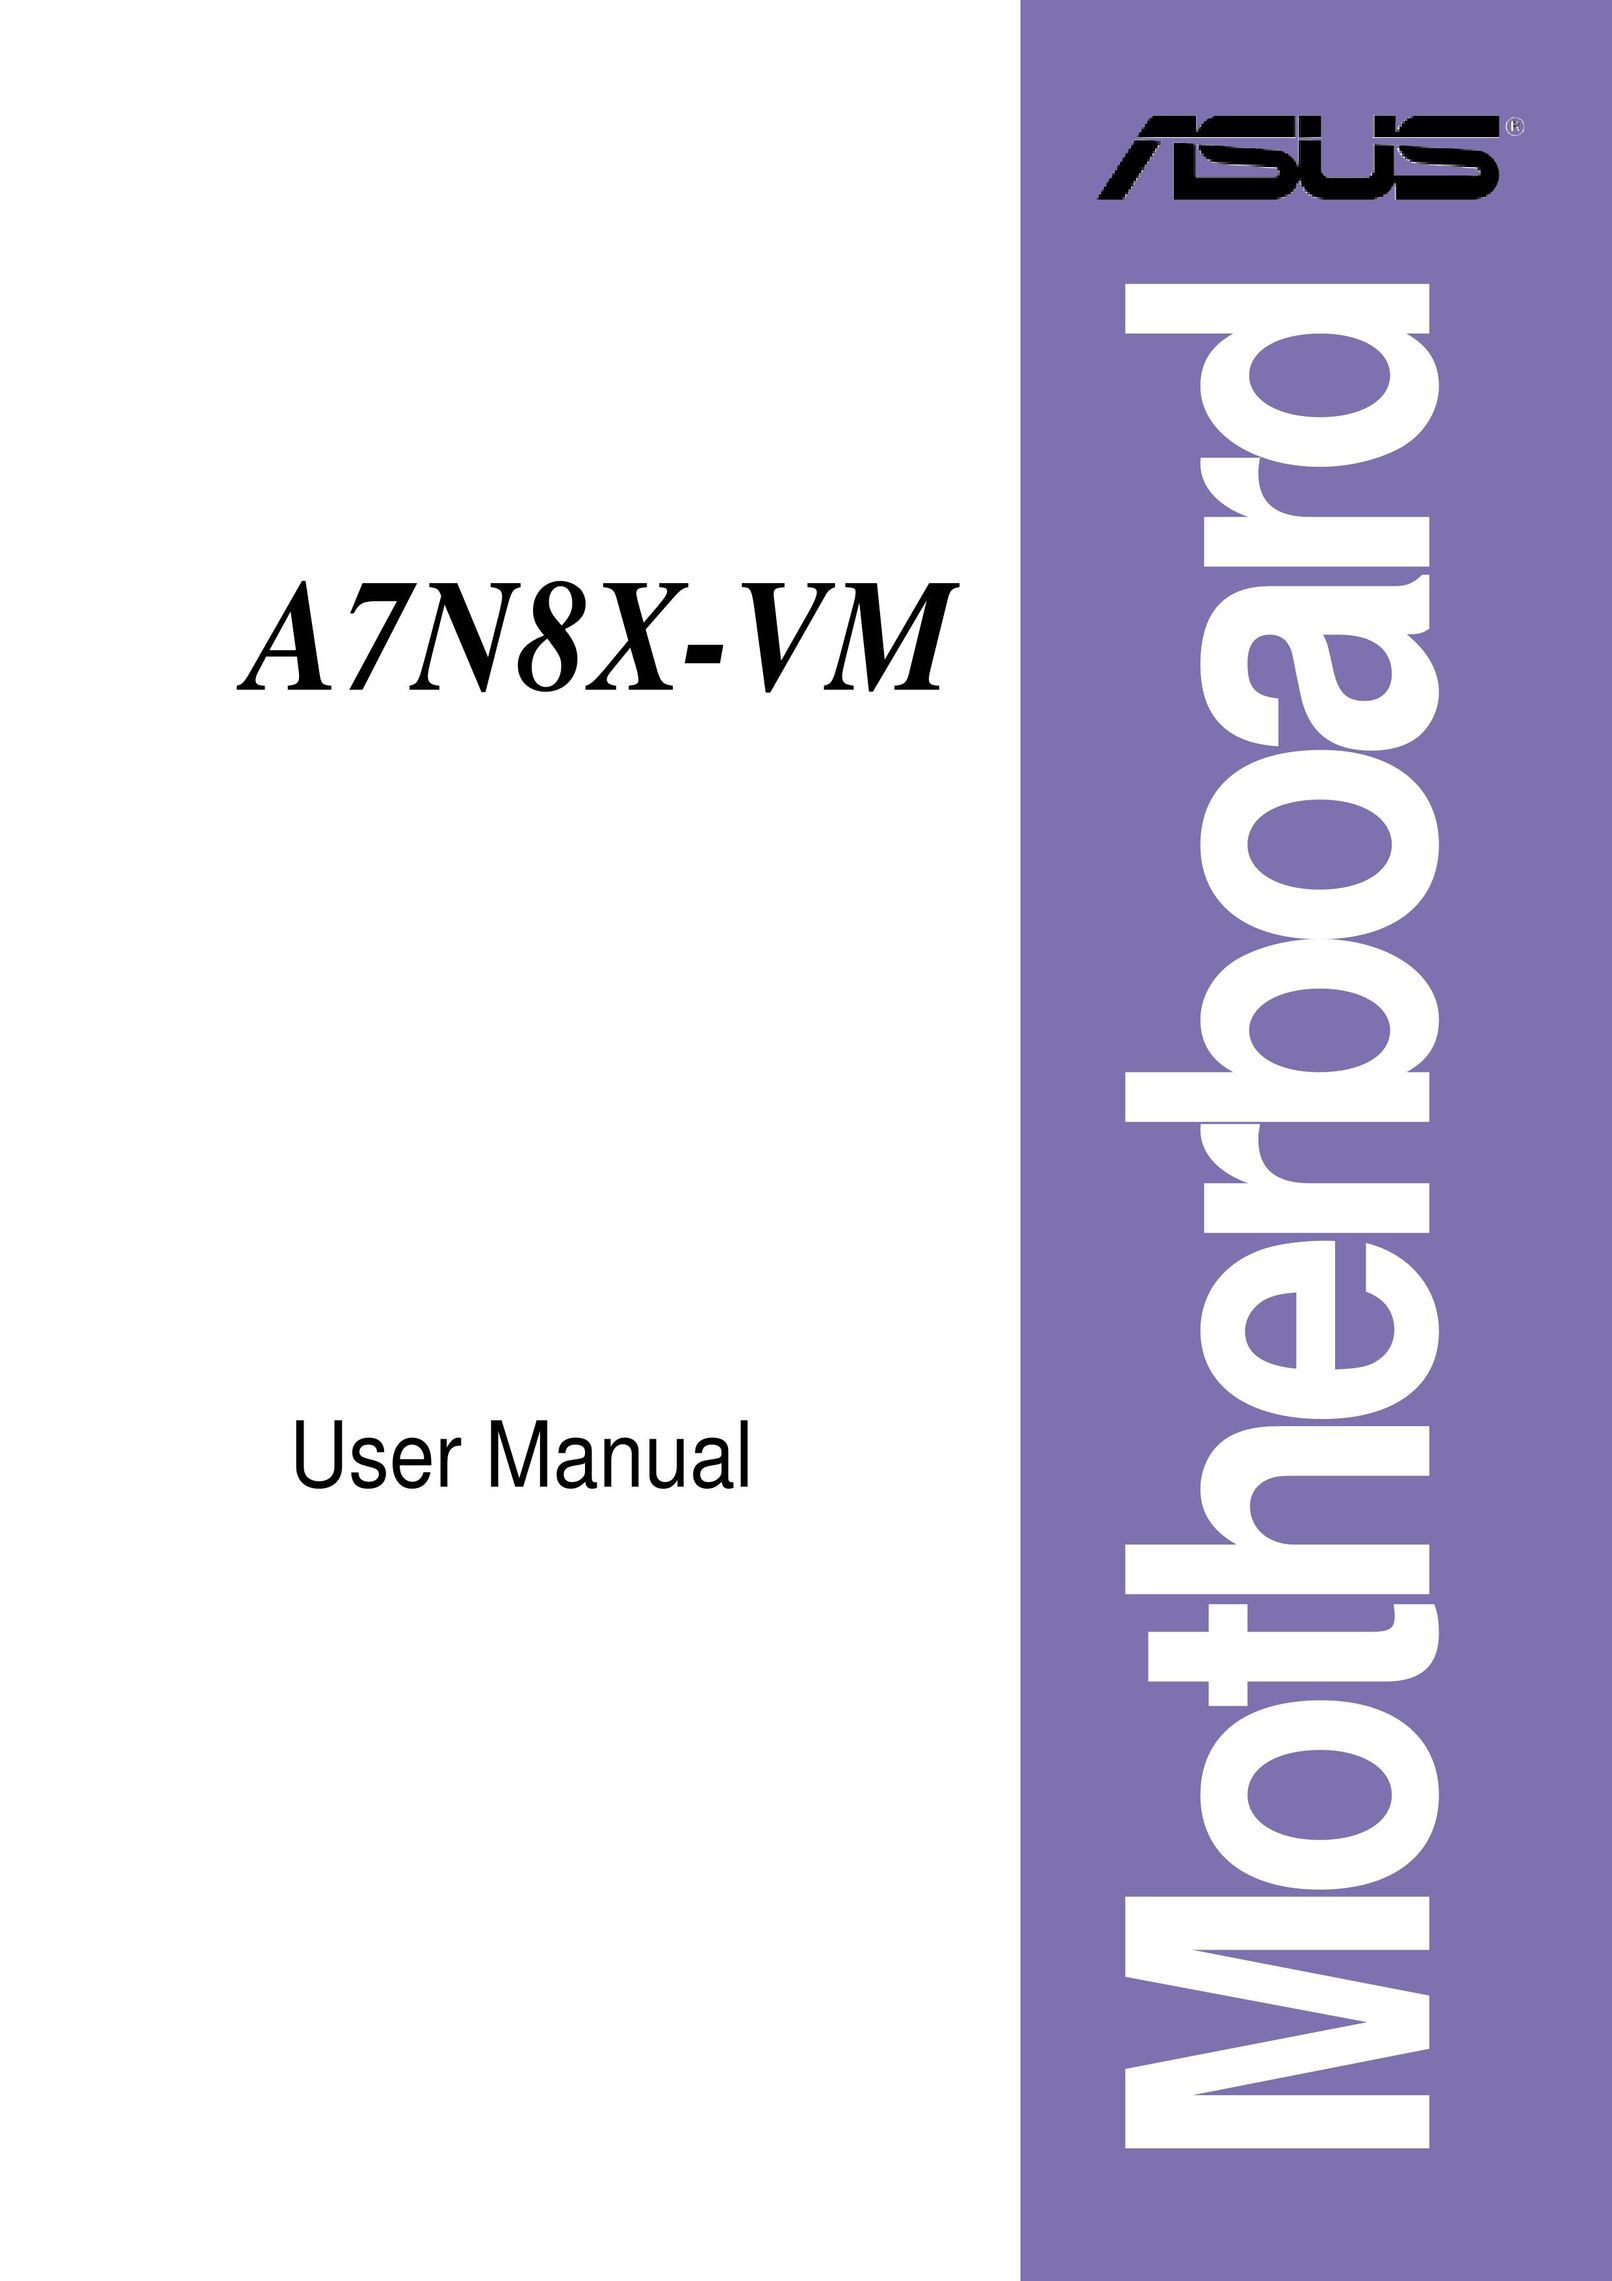 Asus A7N8X-VM Network Card User Manual